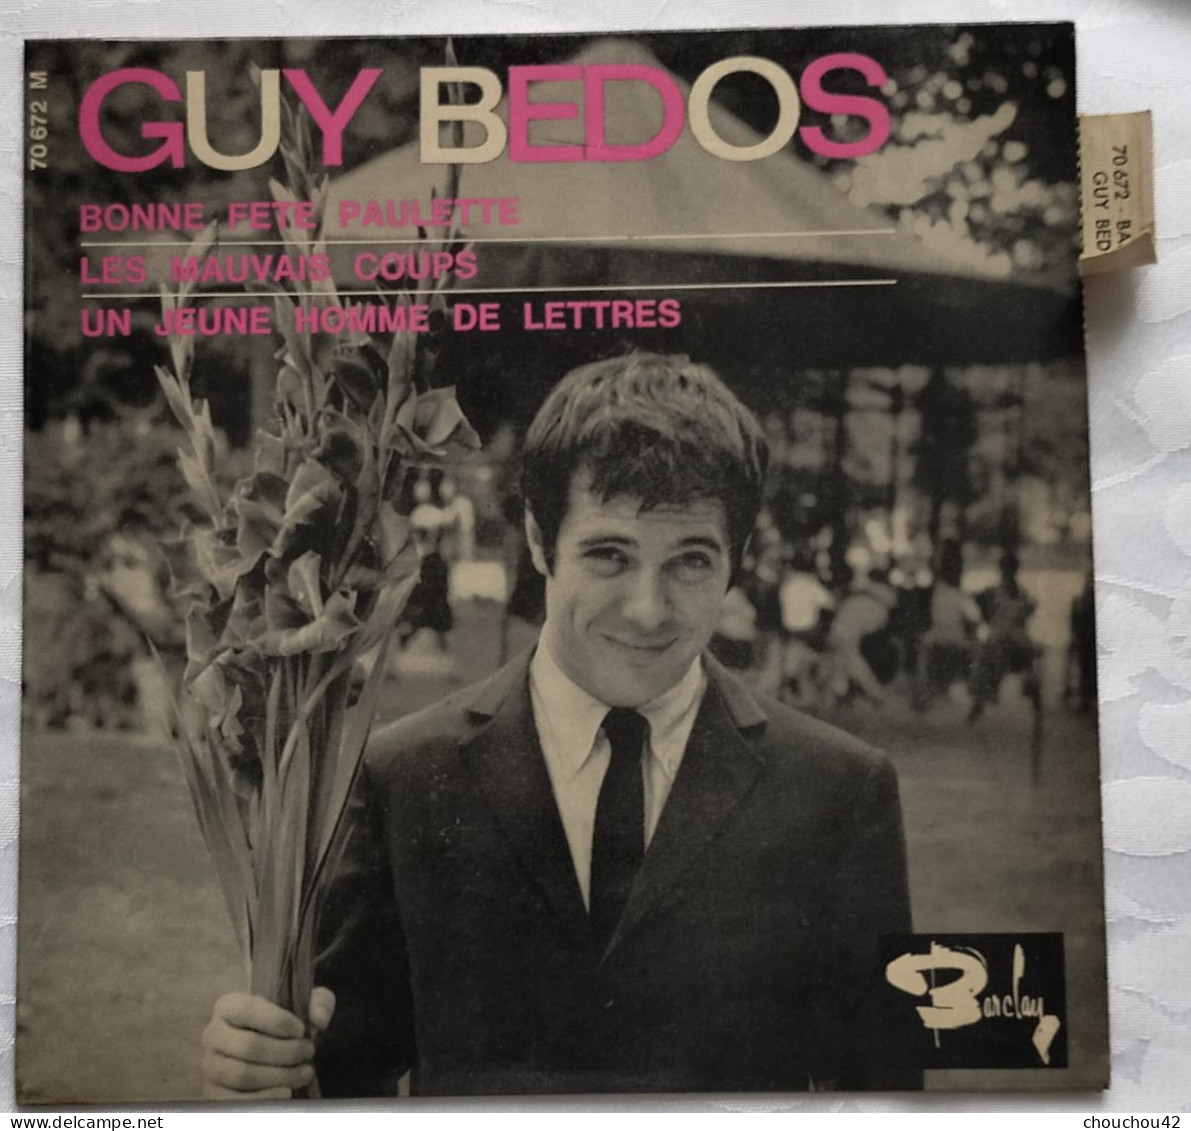 Guy Bedos - Humour, Cabaret